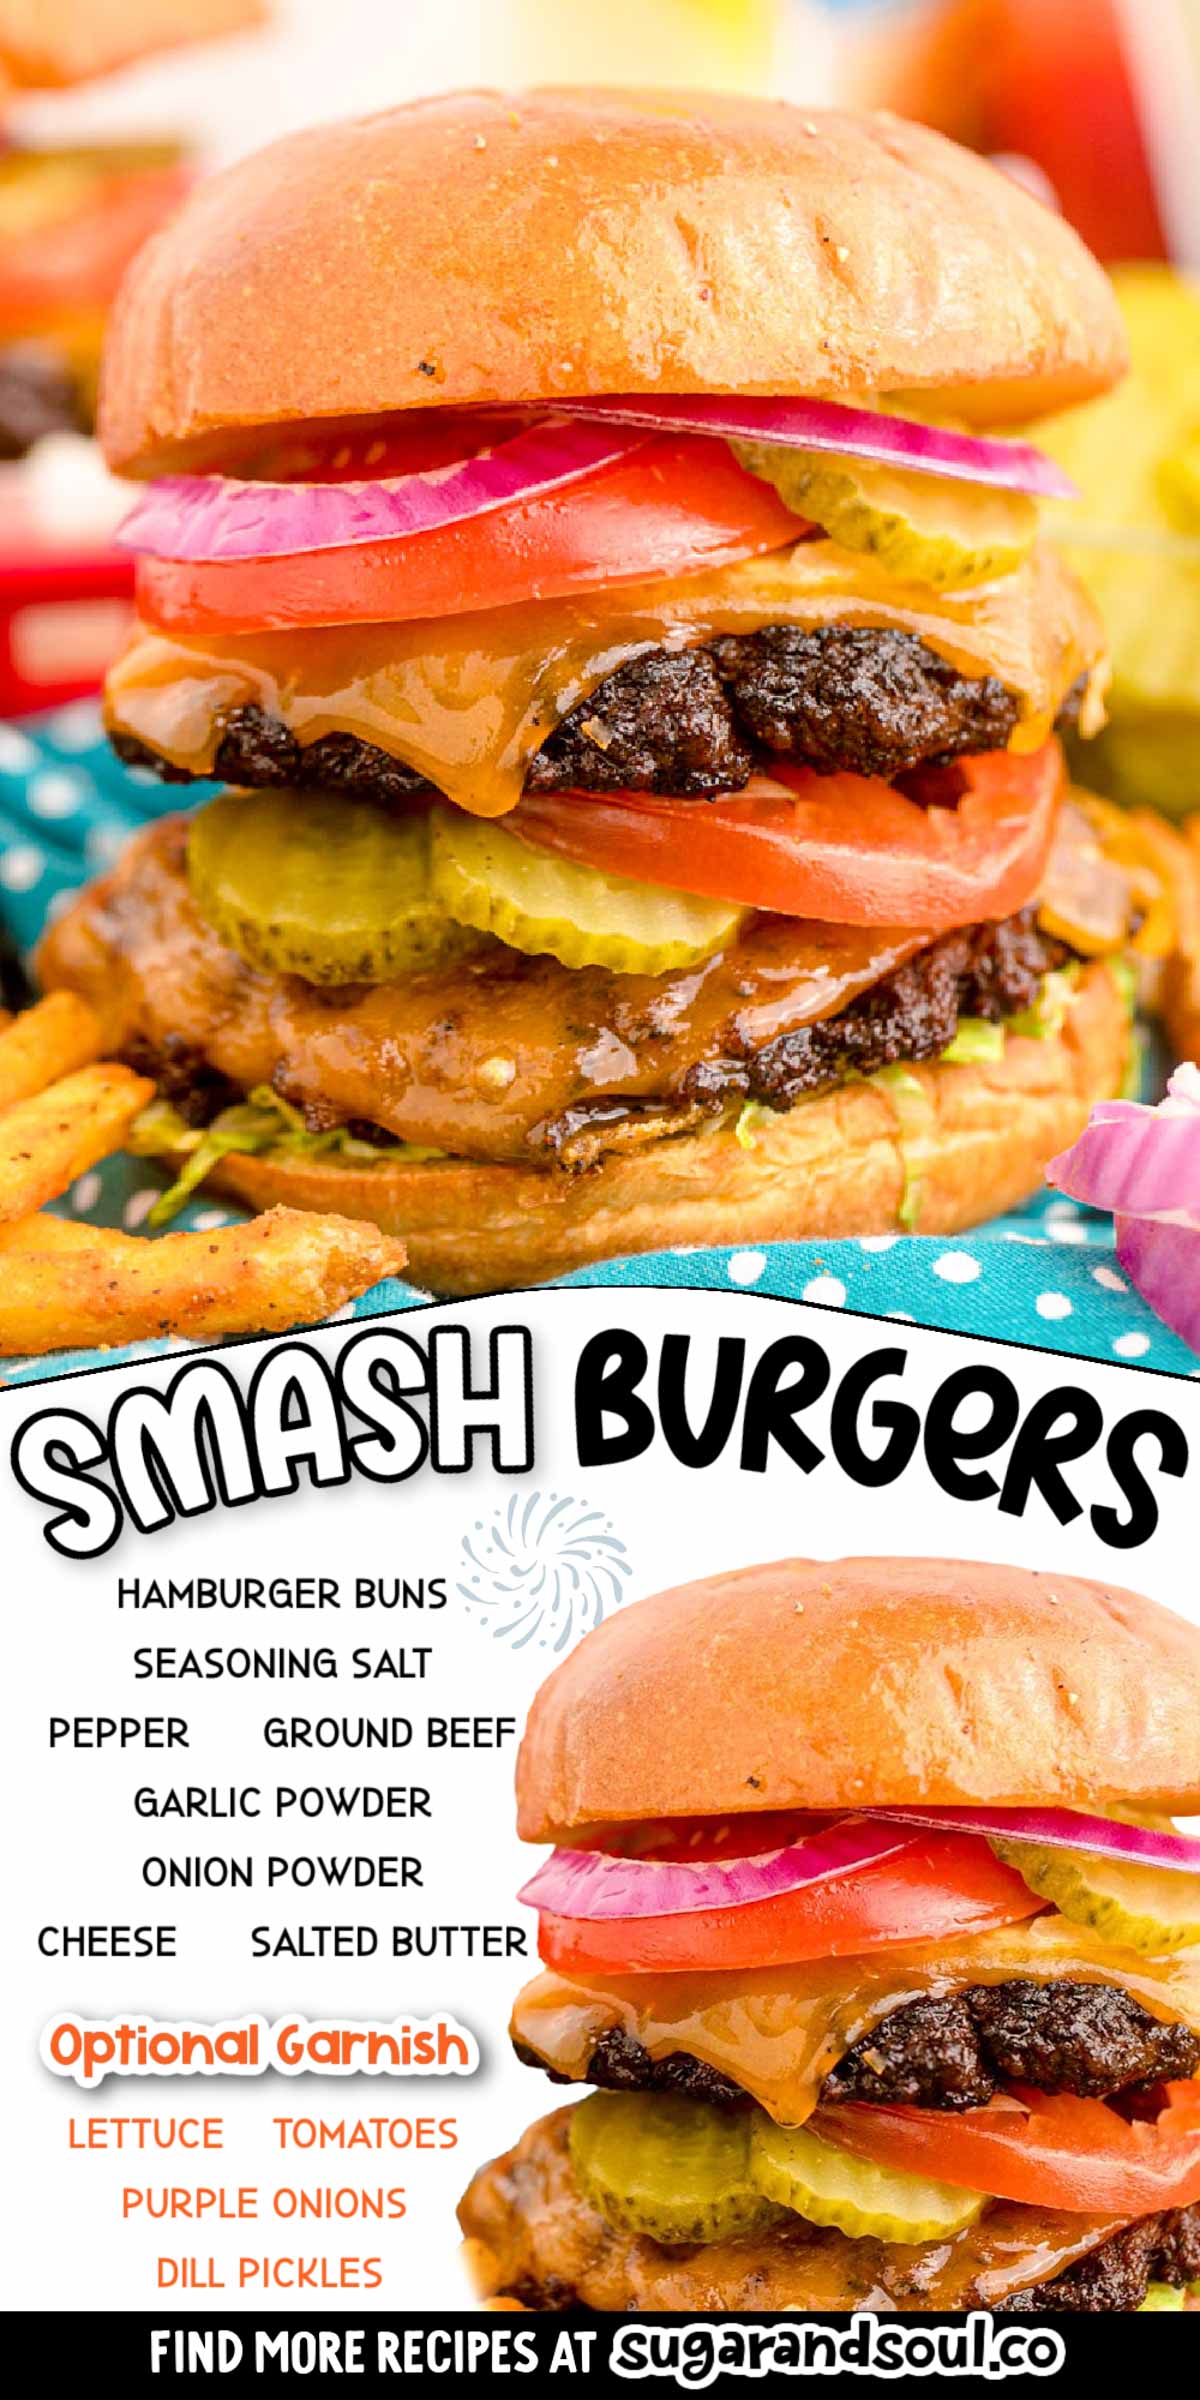 https://www.sugarandsoul.co/wp-content/uploads/2022/04/Smash-Burgers.jpg